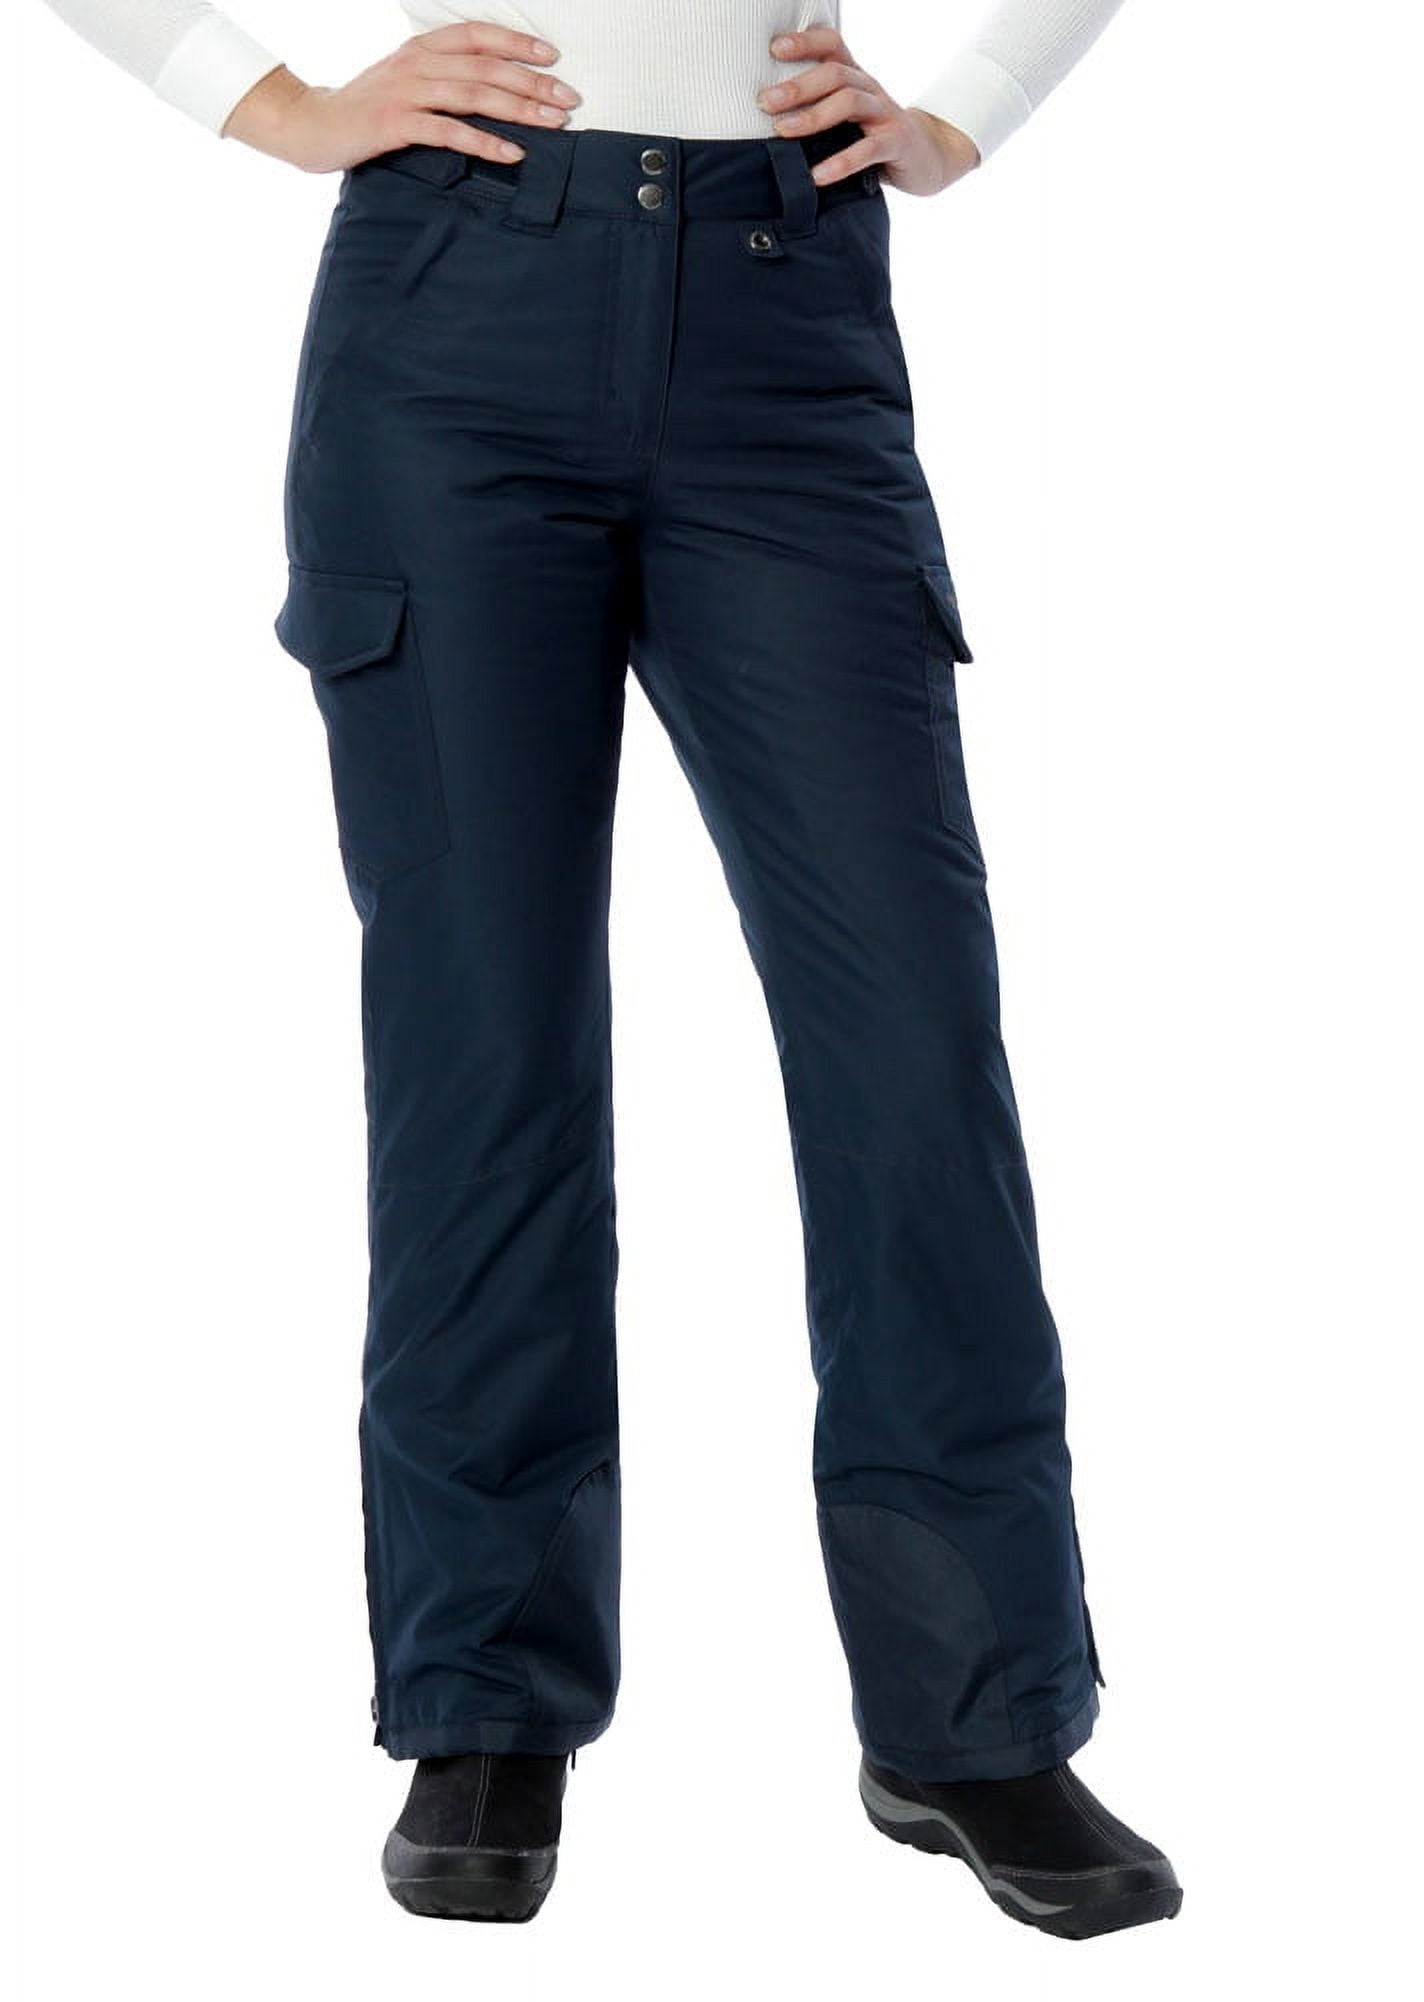 Arctix Women's Snow Sports Insulated Cargo Pants Black XL